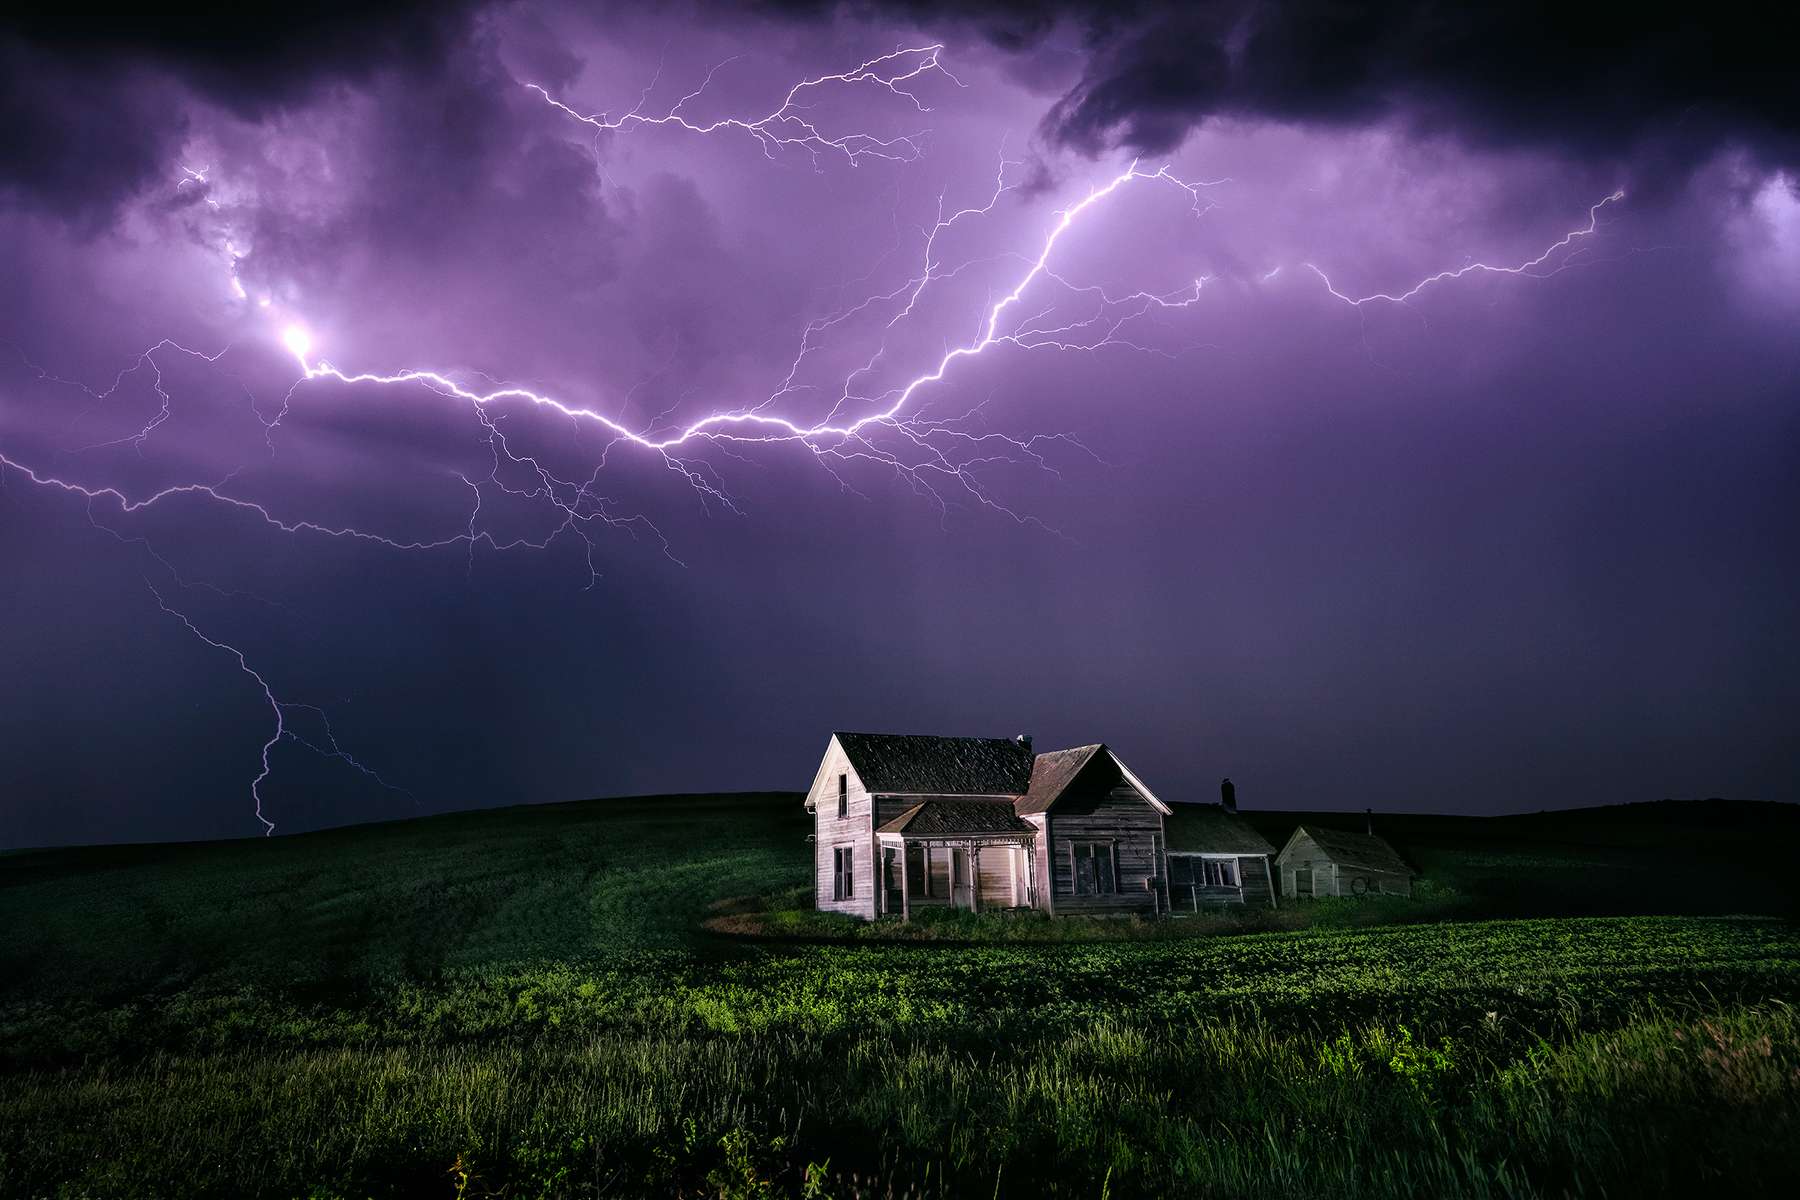 Lighting storm over abandoned home